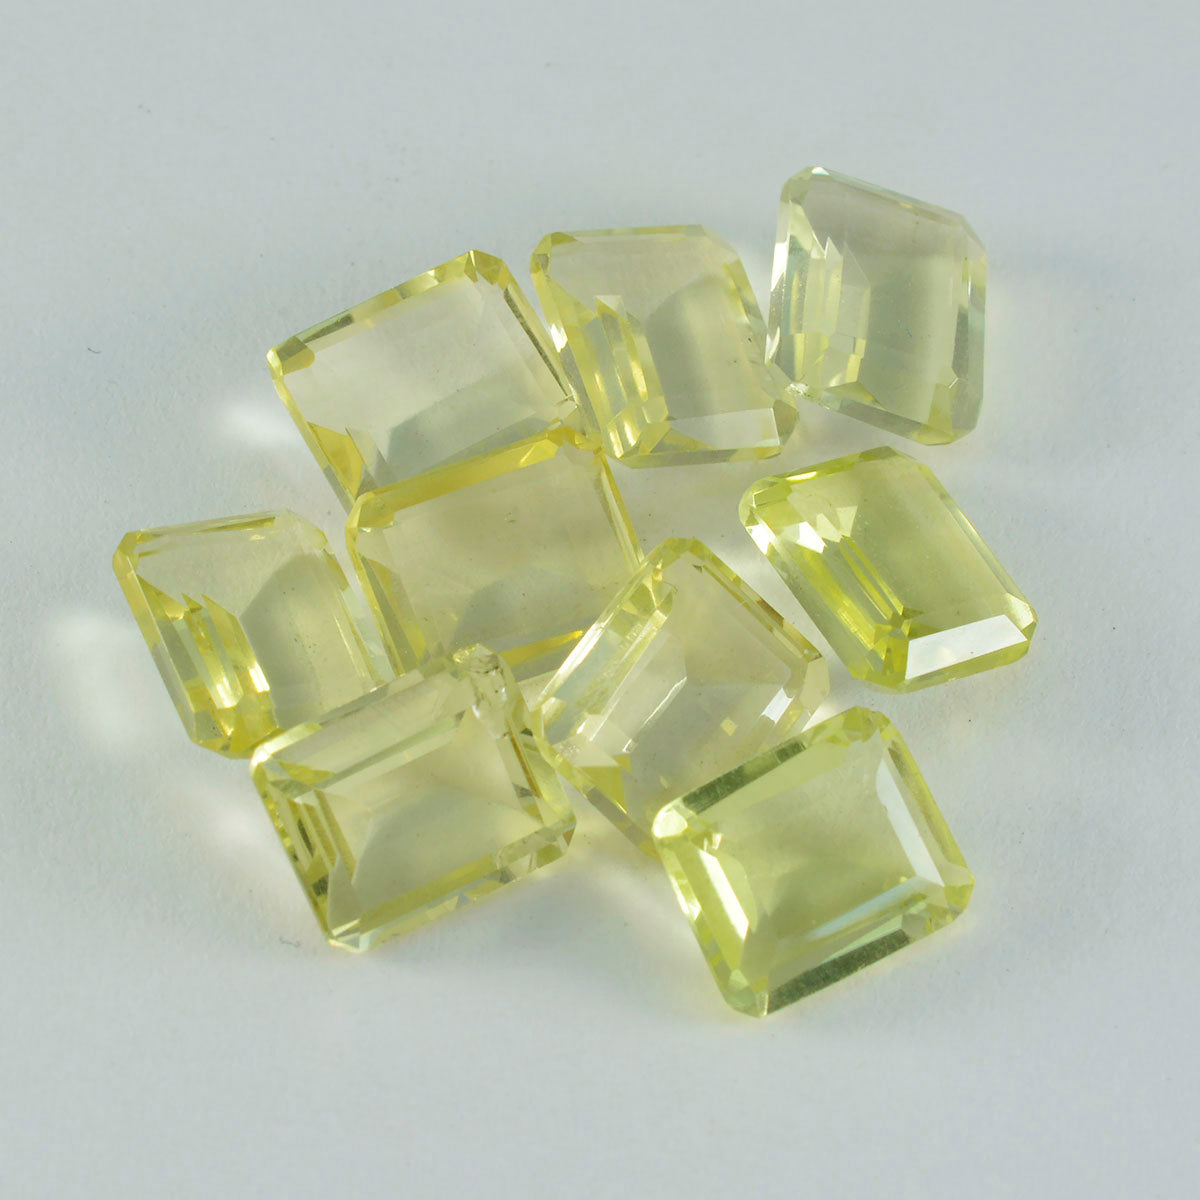 riyogems 1 st gul citron kvarts facetterad 7x9 mm oktagon form god kvalitet pärla